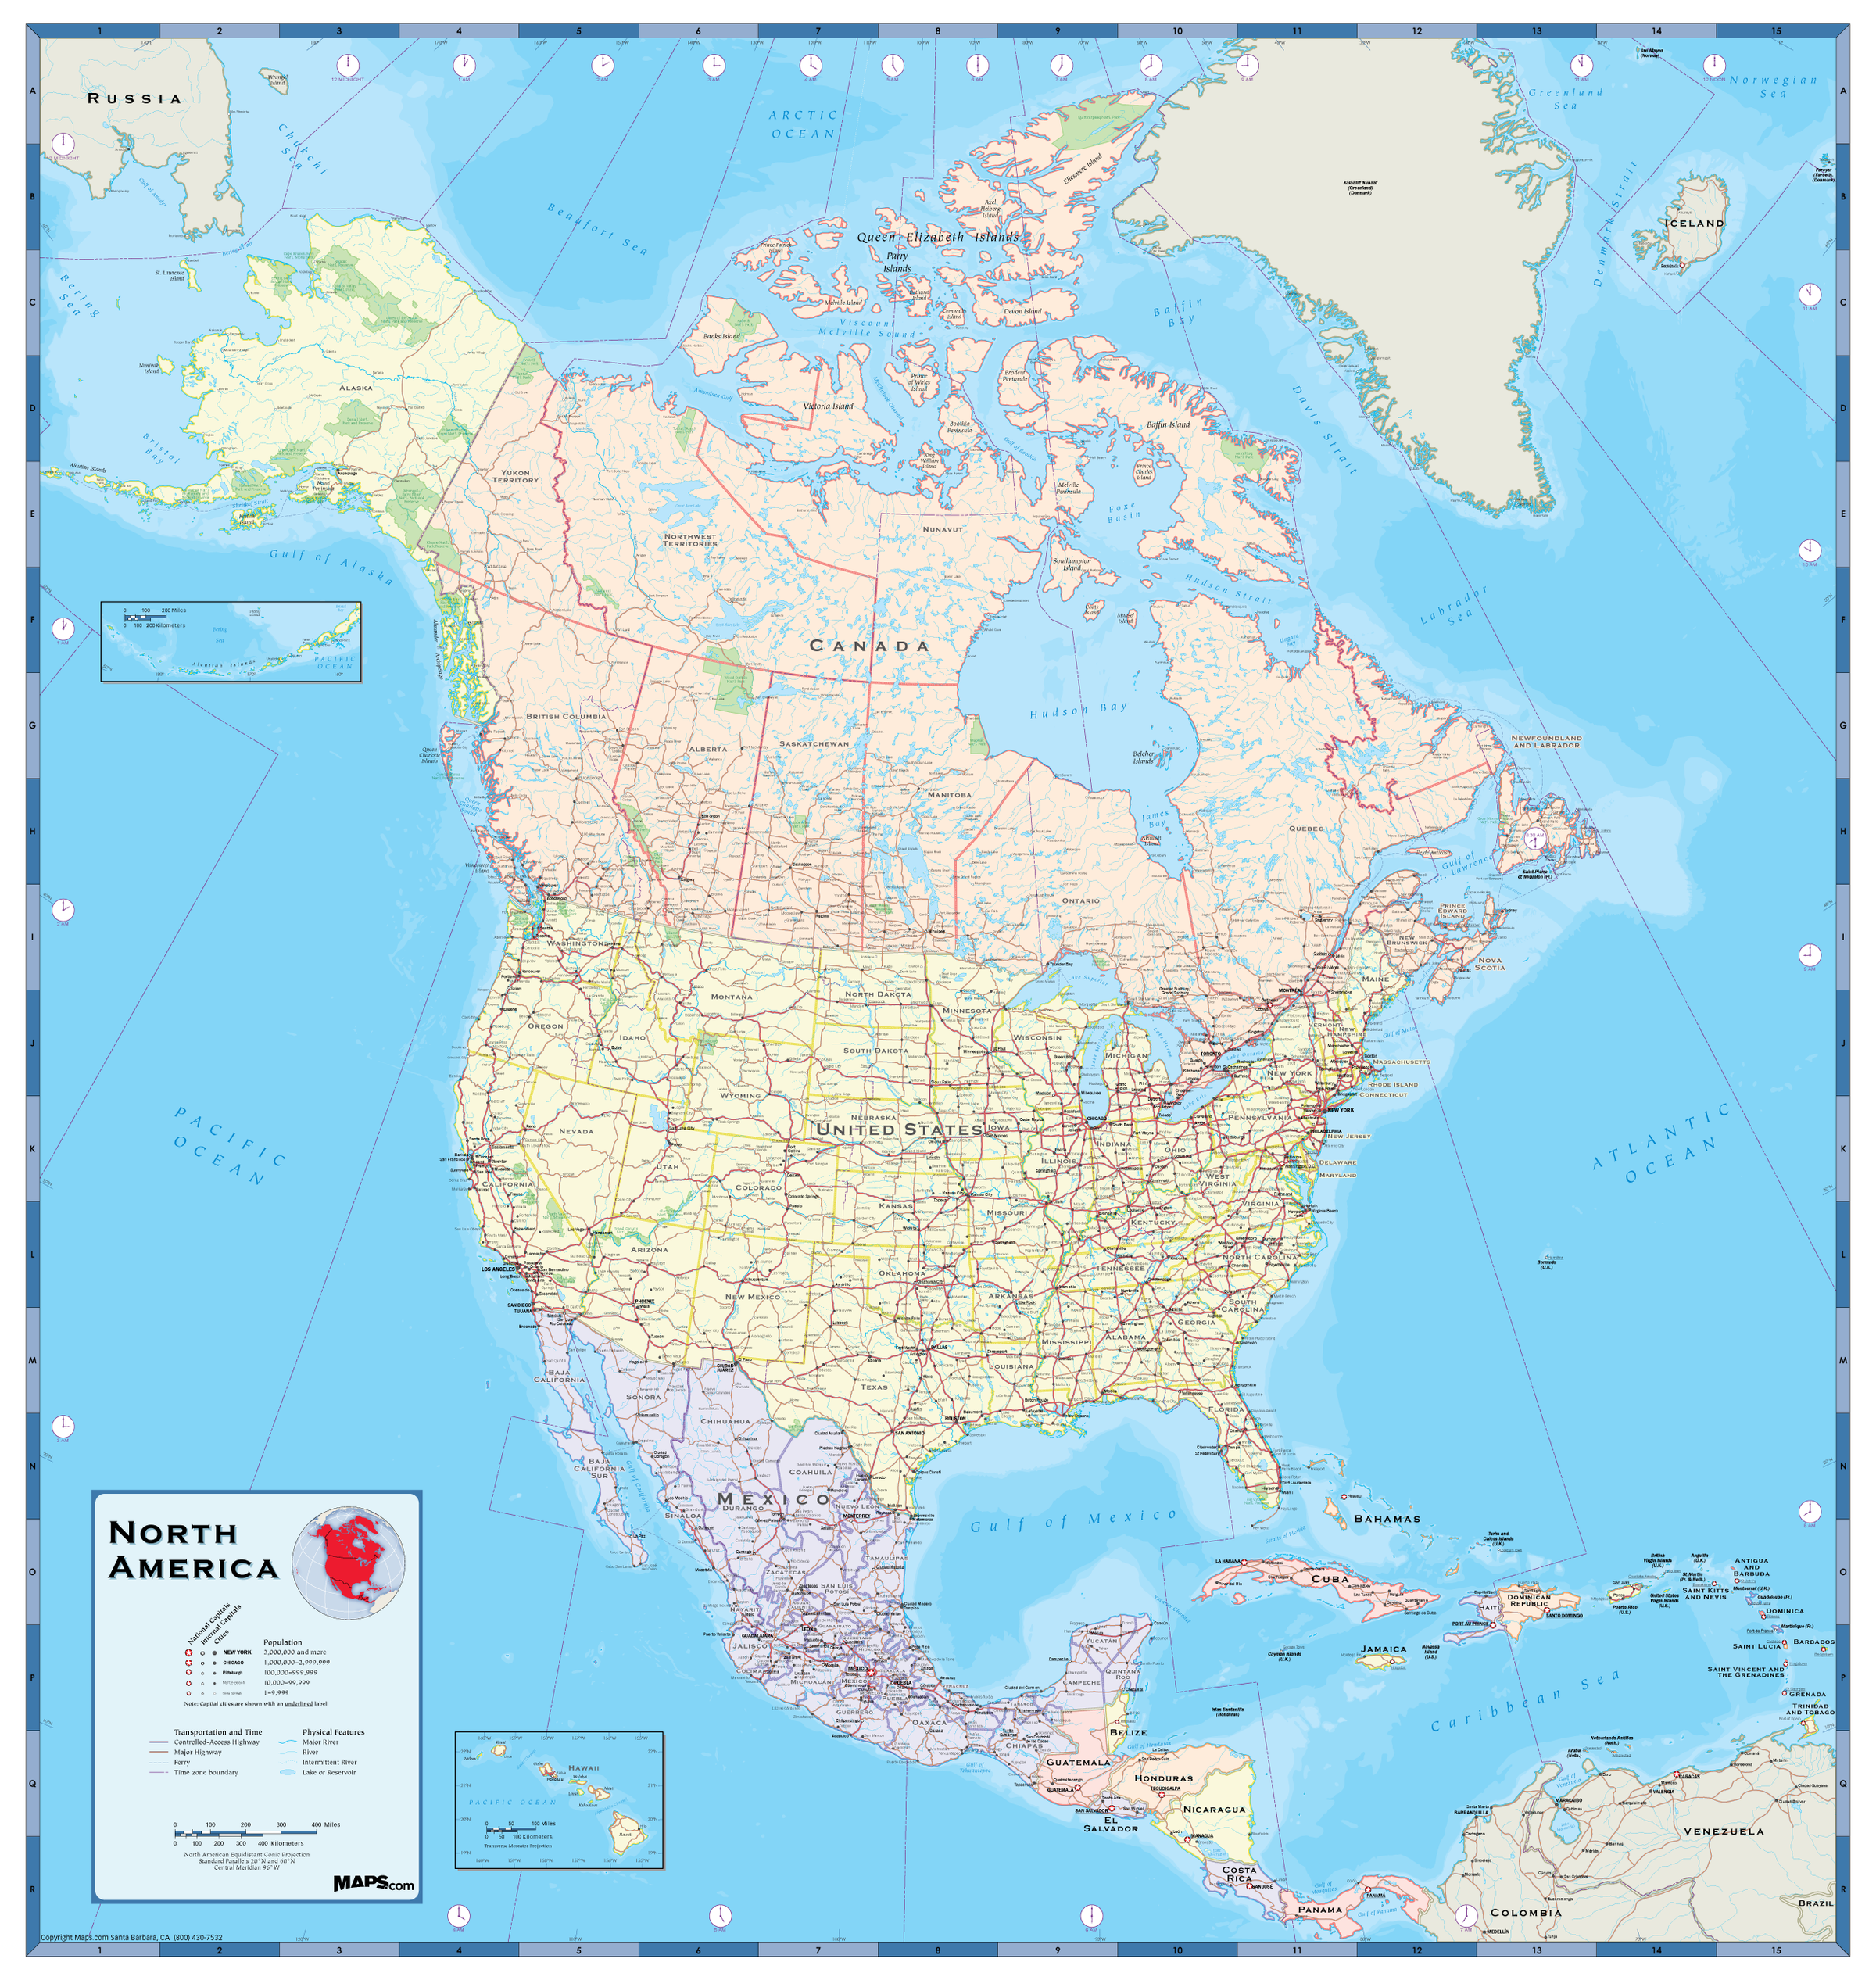 Wall Map Of North America North America Wall Map | Maps.com.com